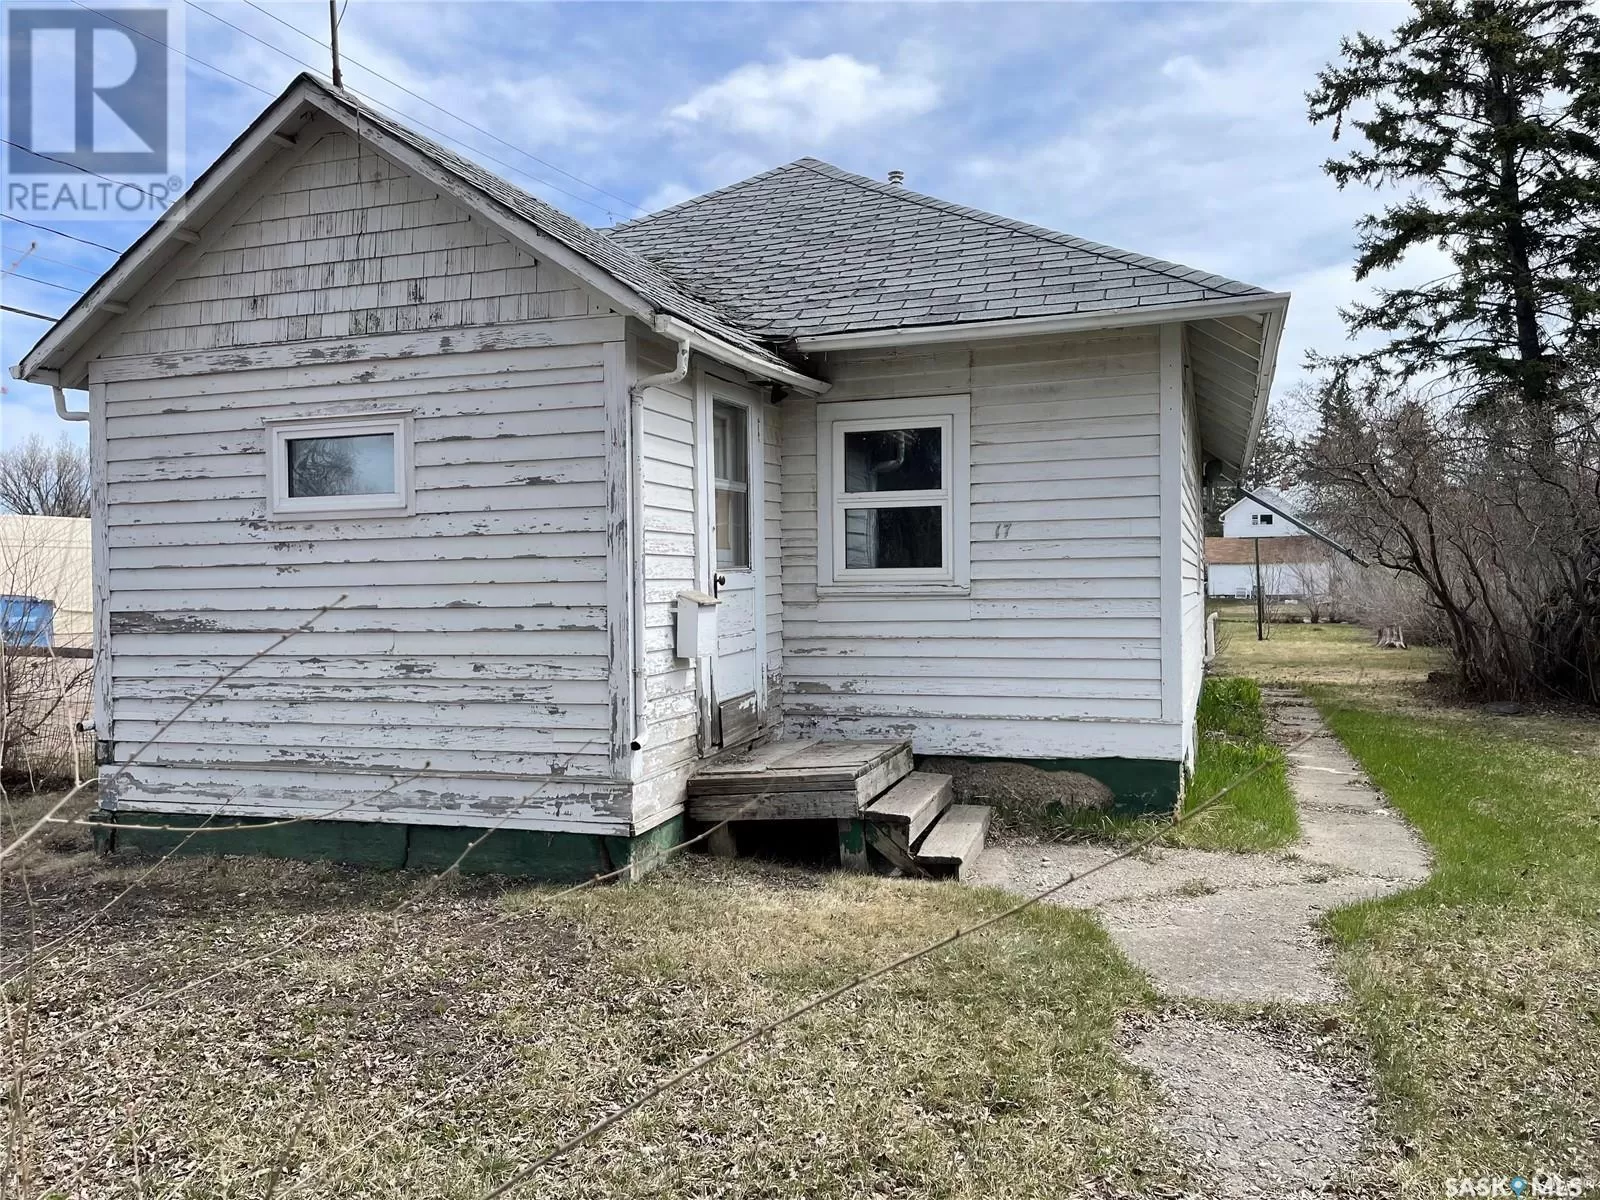 House for rent: 17 Melrose Avenue, Yorkton, Saskatchewan S3N 1Y9